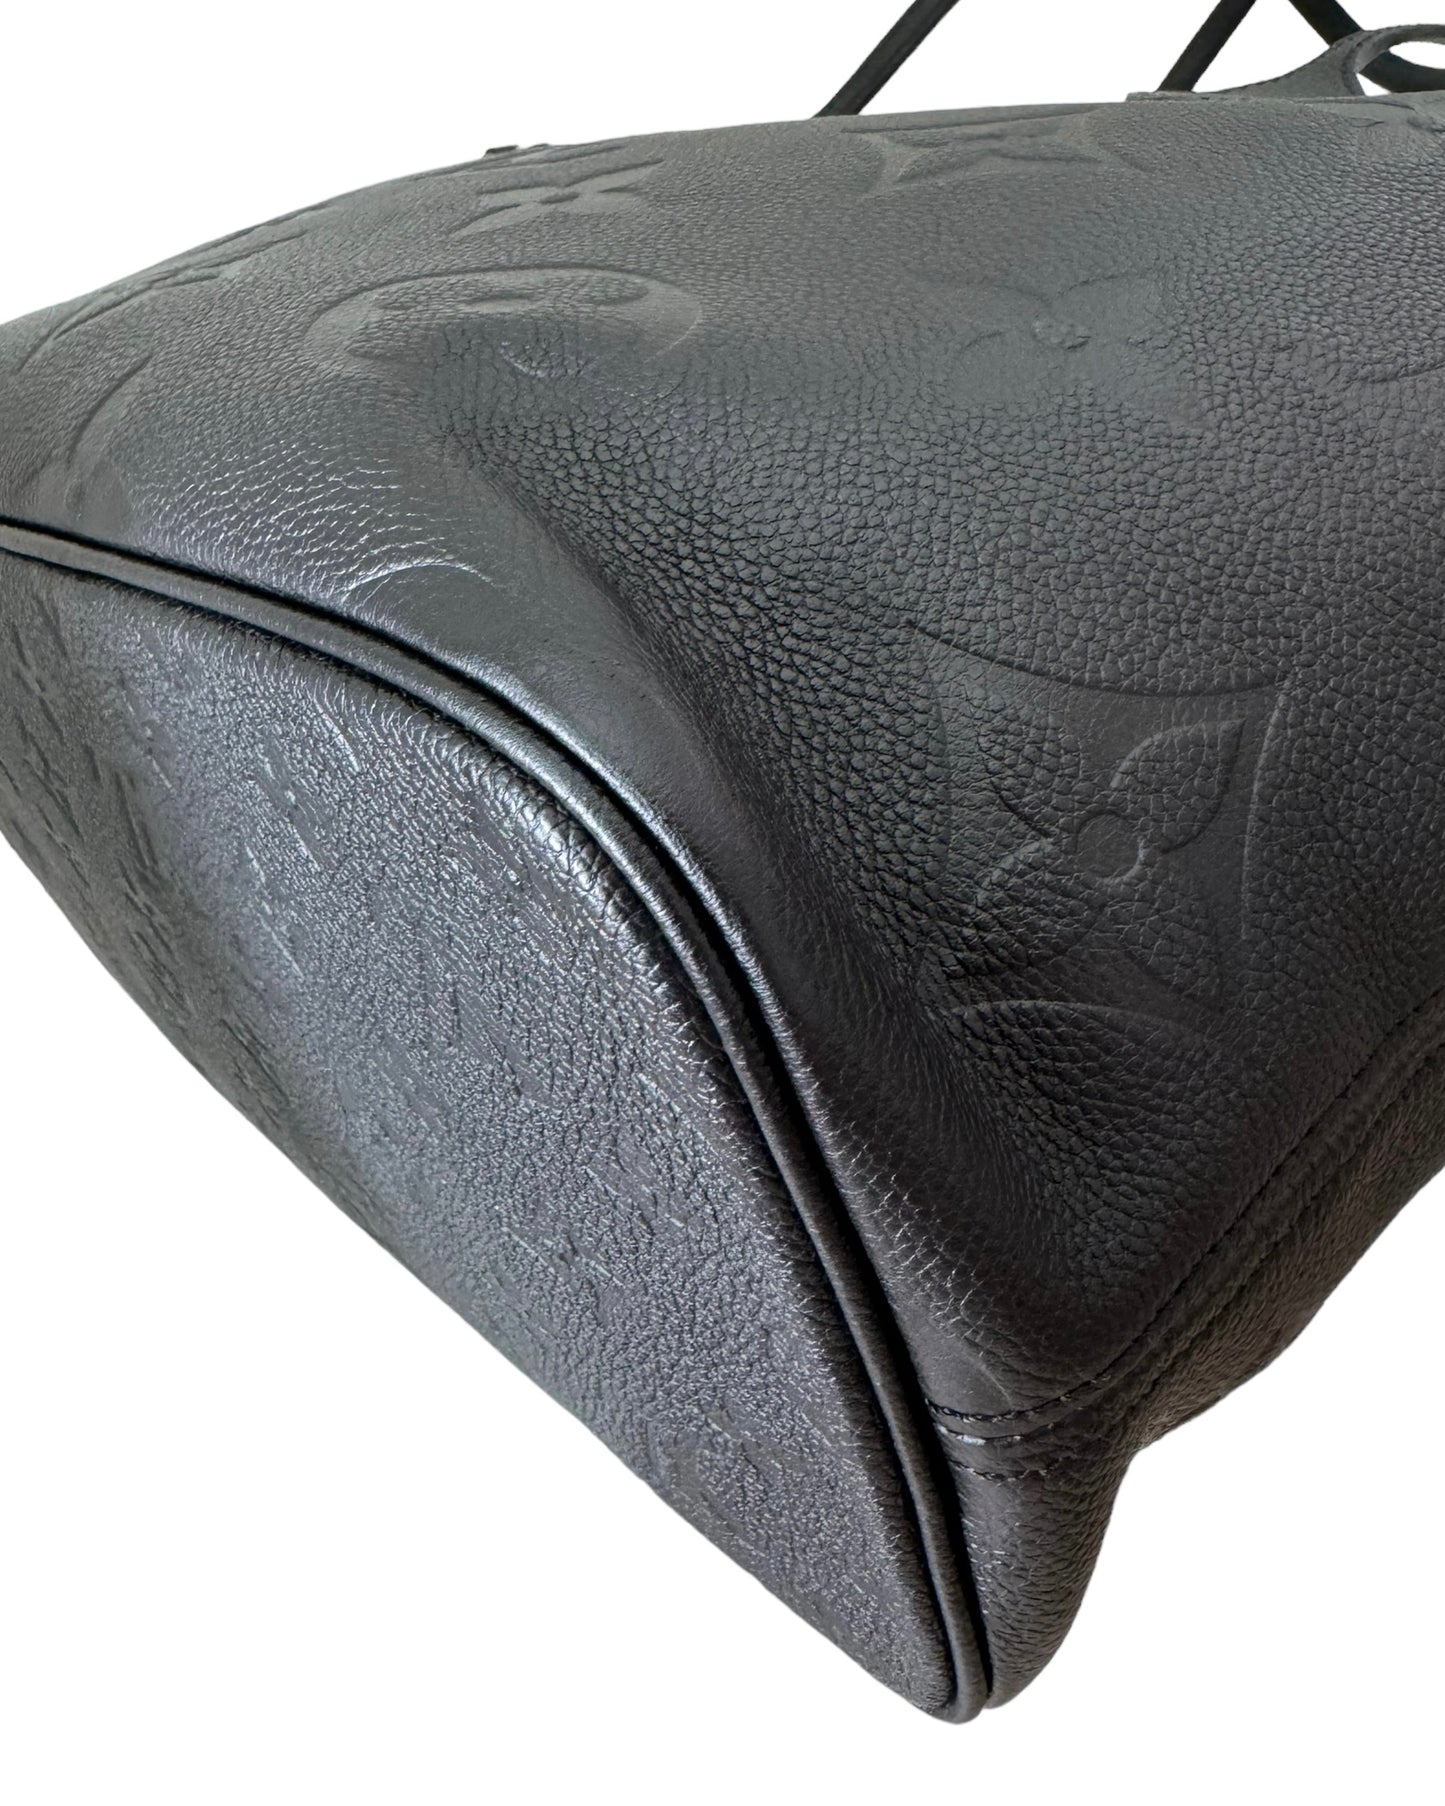 Louis Vuitton Neverfull MM Empreinte Black Leather Tote Bag + Dust Bag